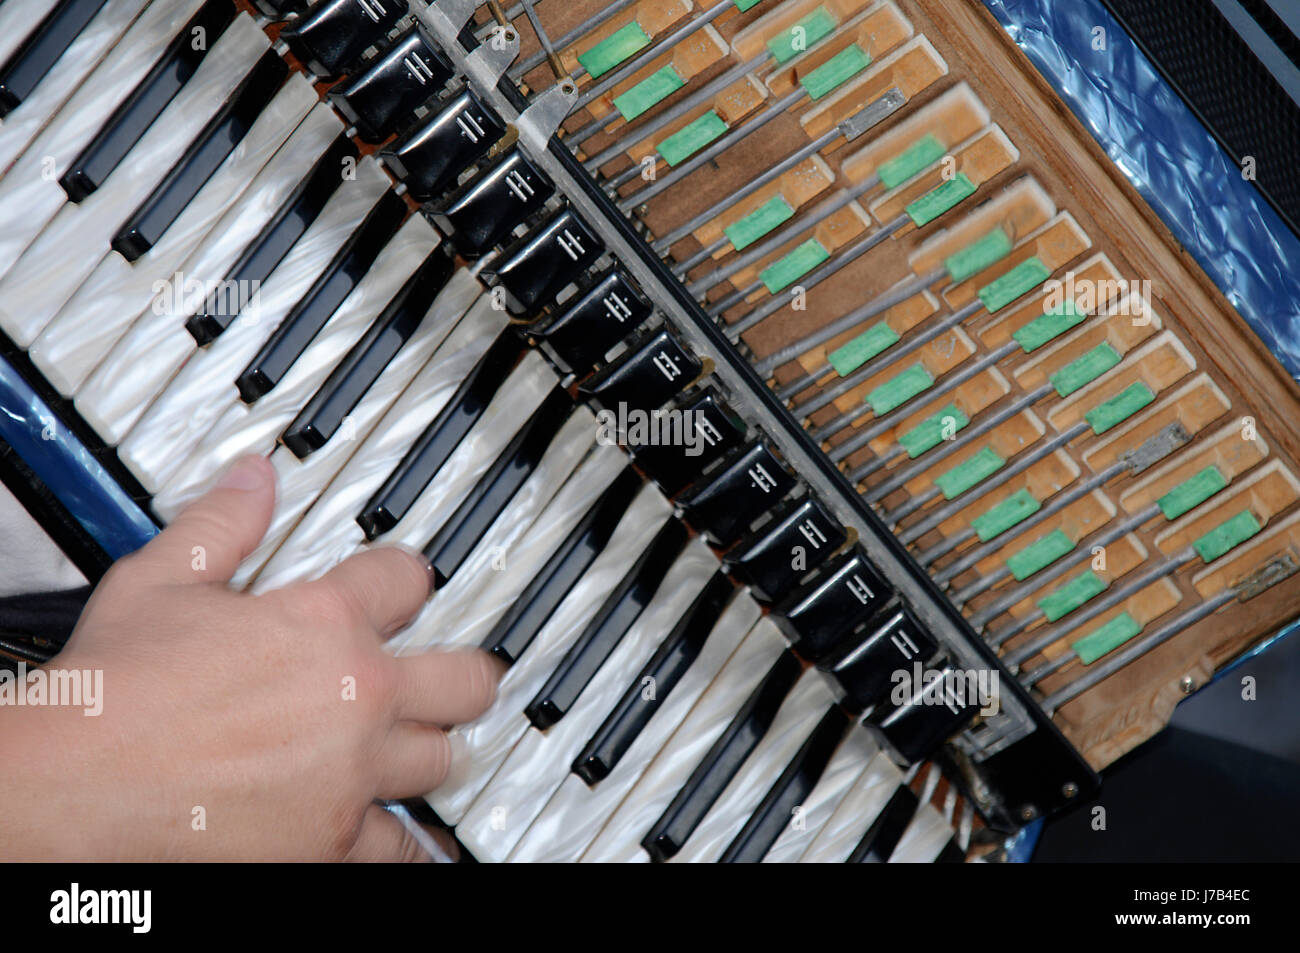 party celebration accordion harmonica measure instrument method hand finger Stock Photo